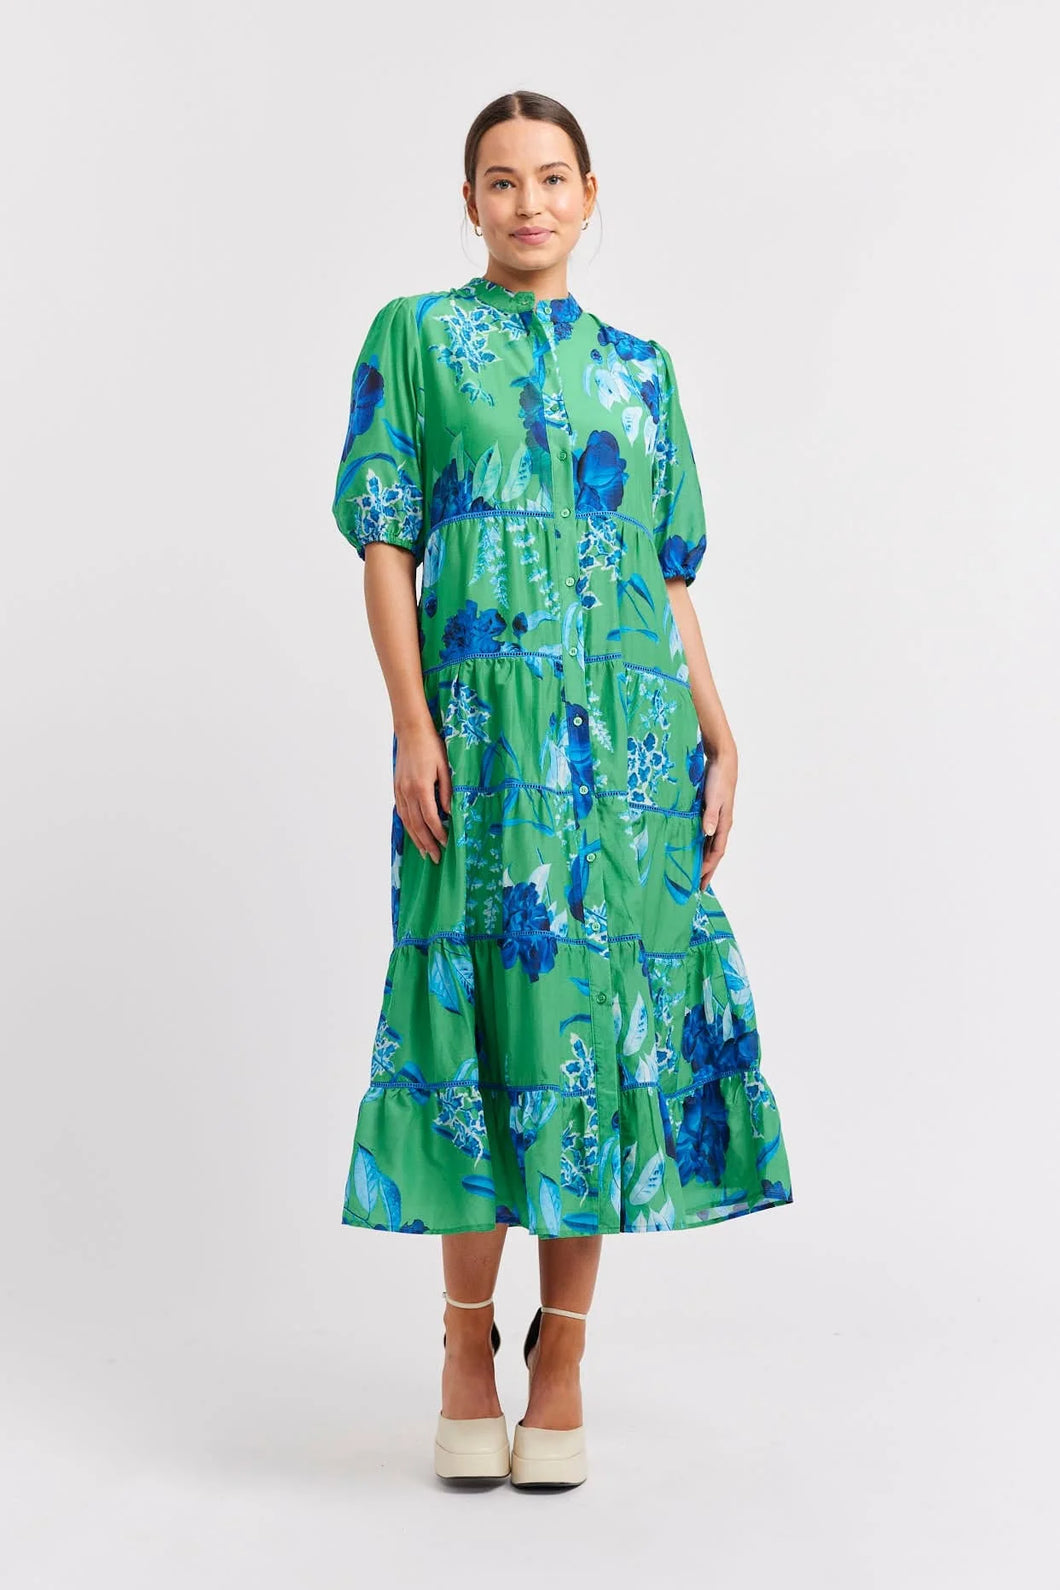 Martina Cotton Silk Dress in Emerald by Alessandra